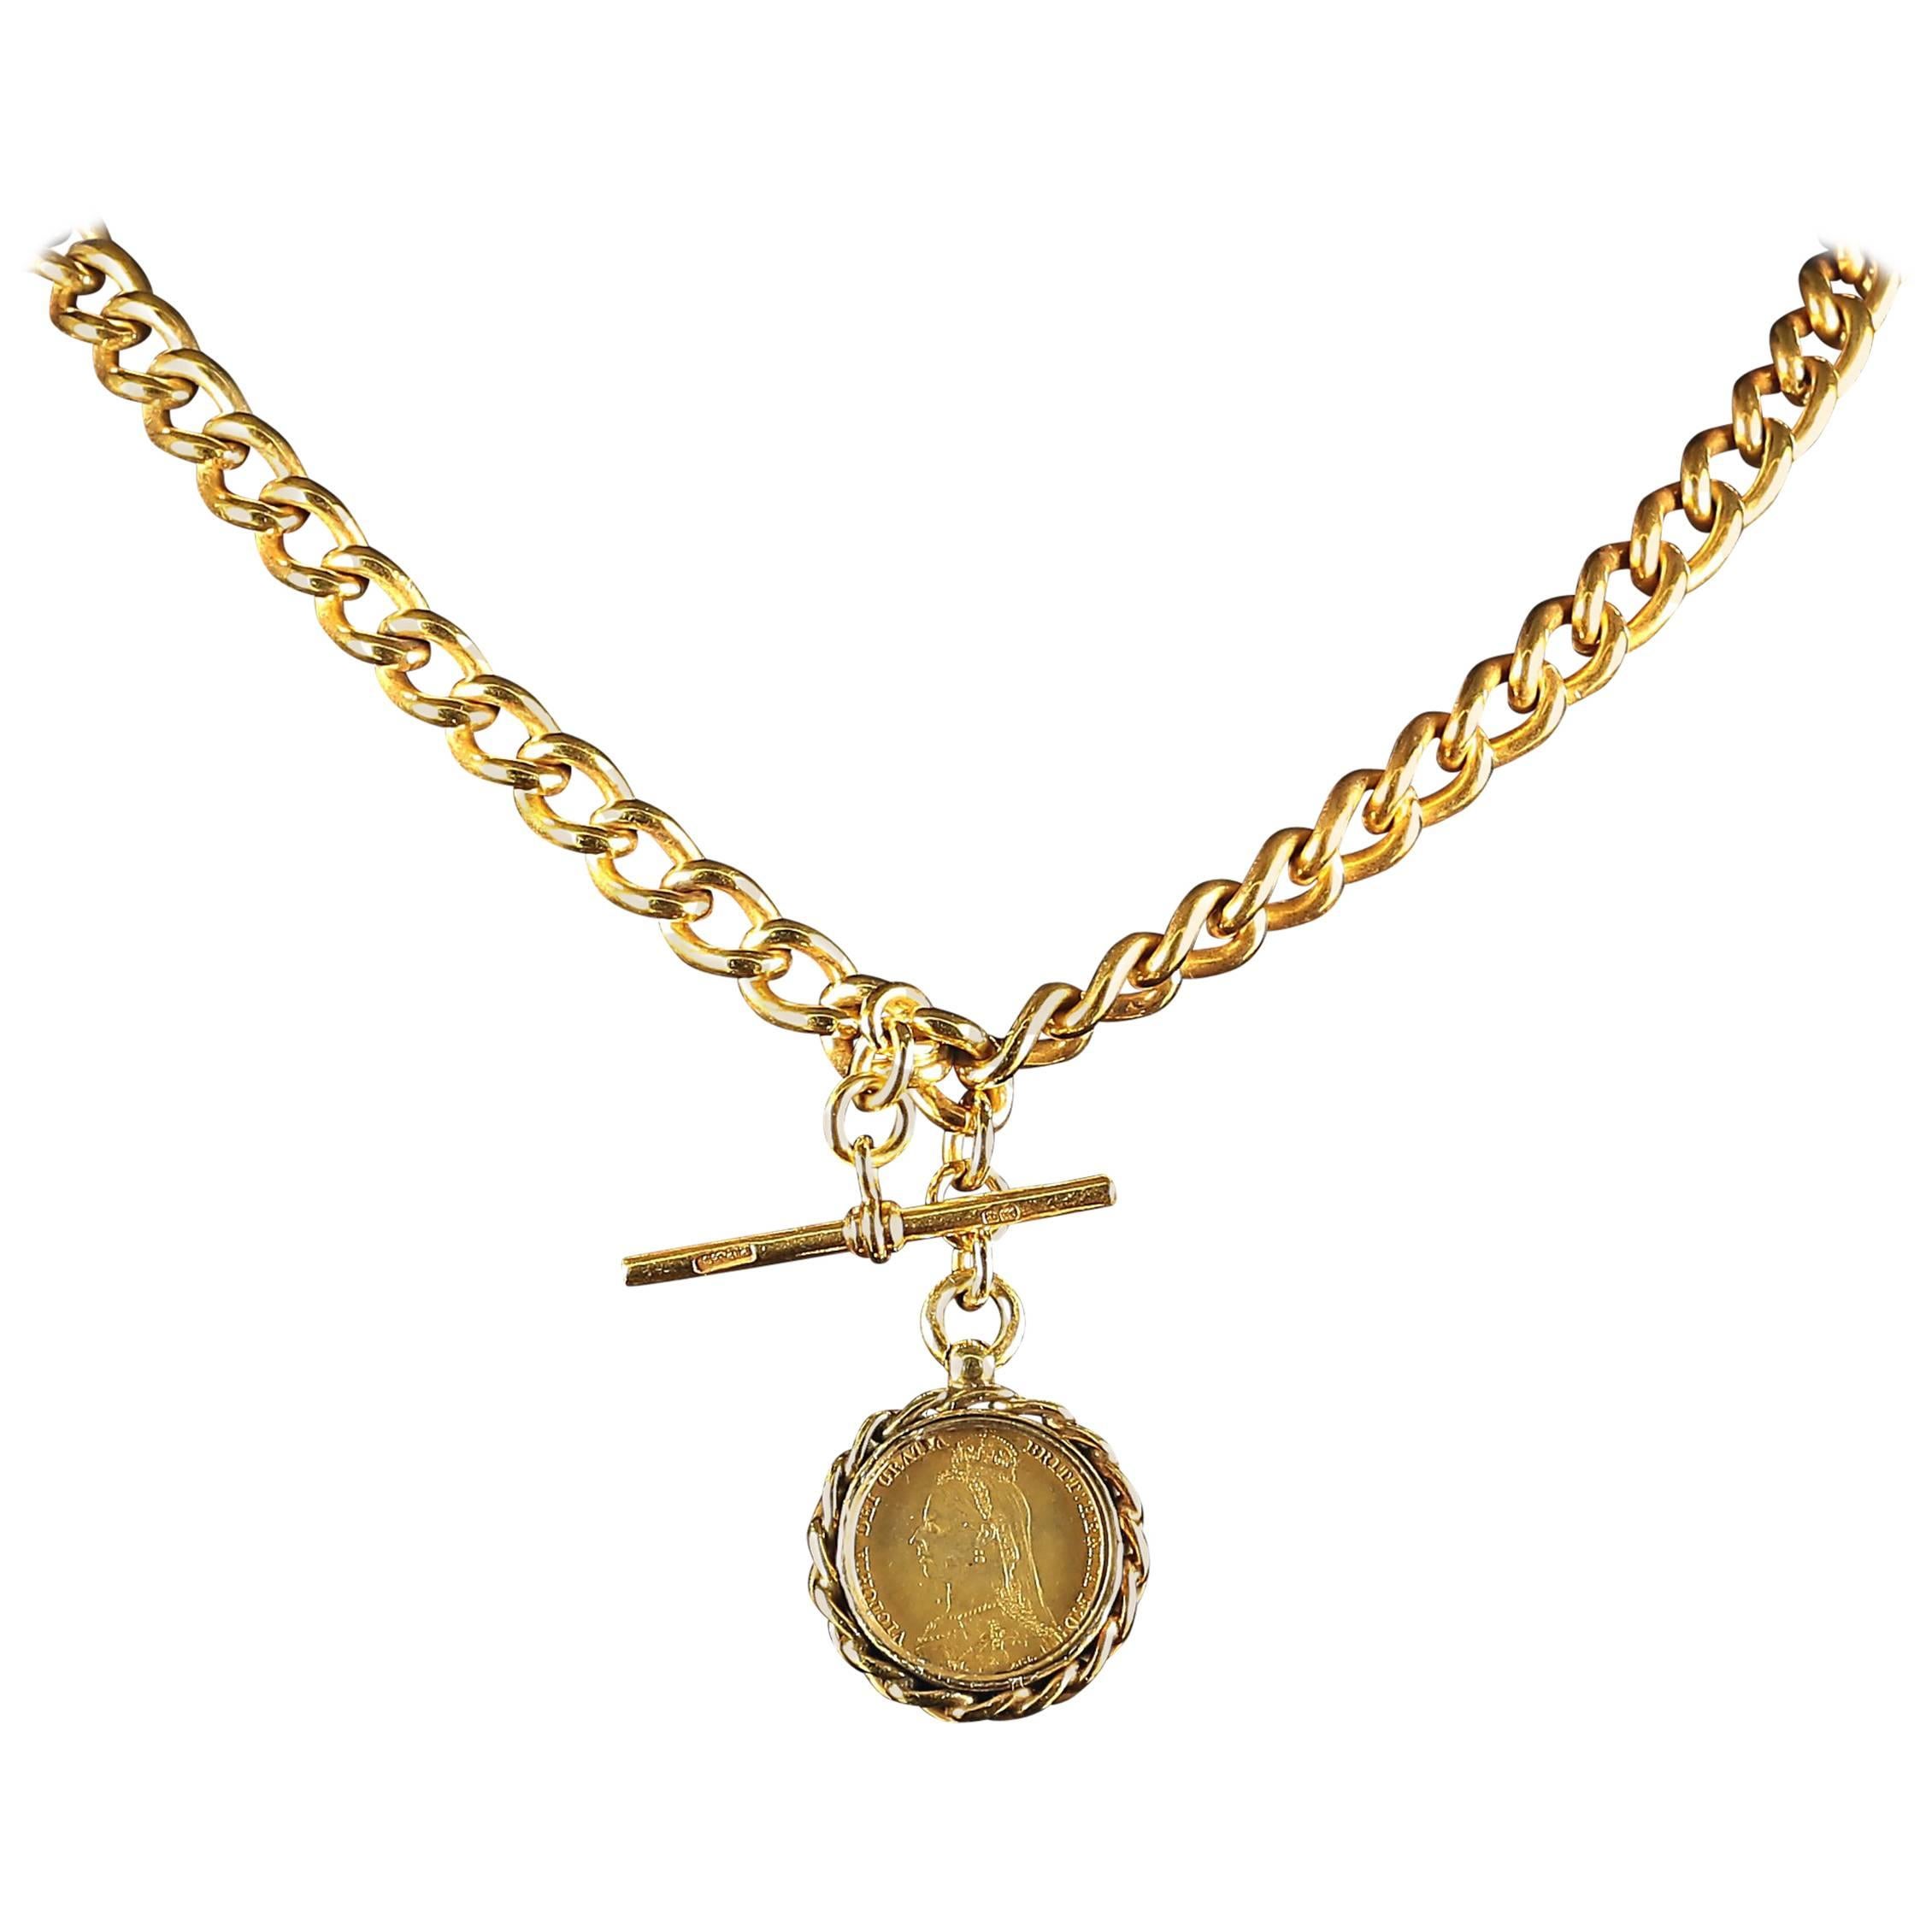 Antique Victorian Albert Chain Necklace Gold T Bar Coin Fob circa 1880